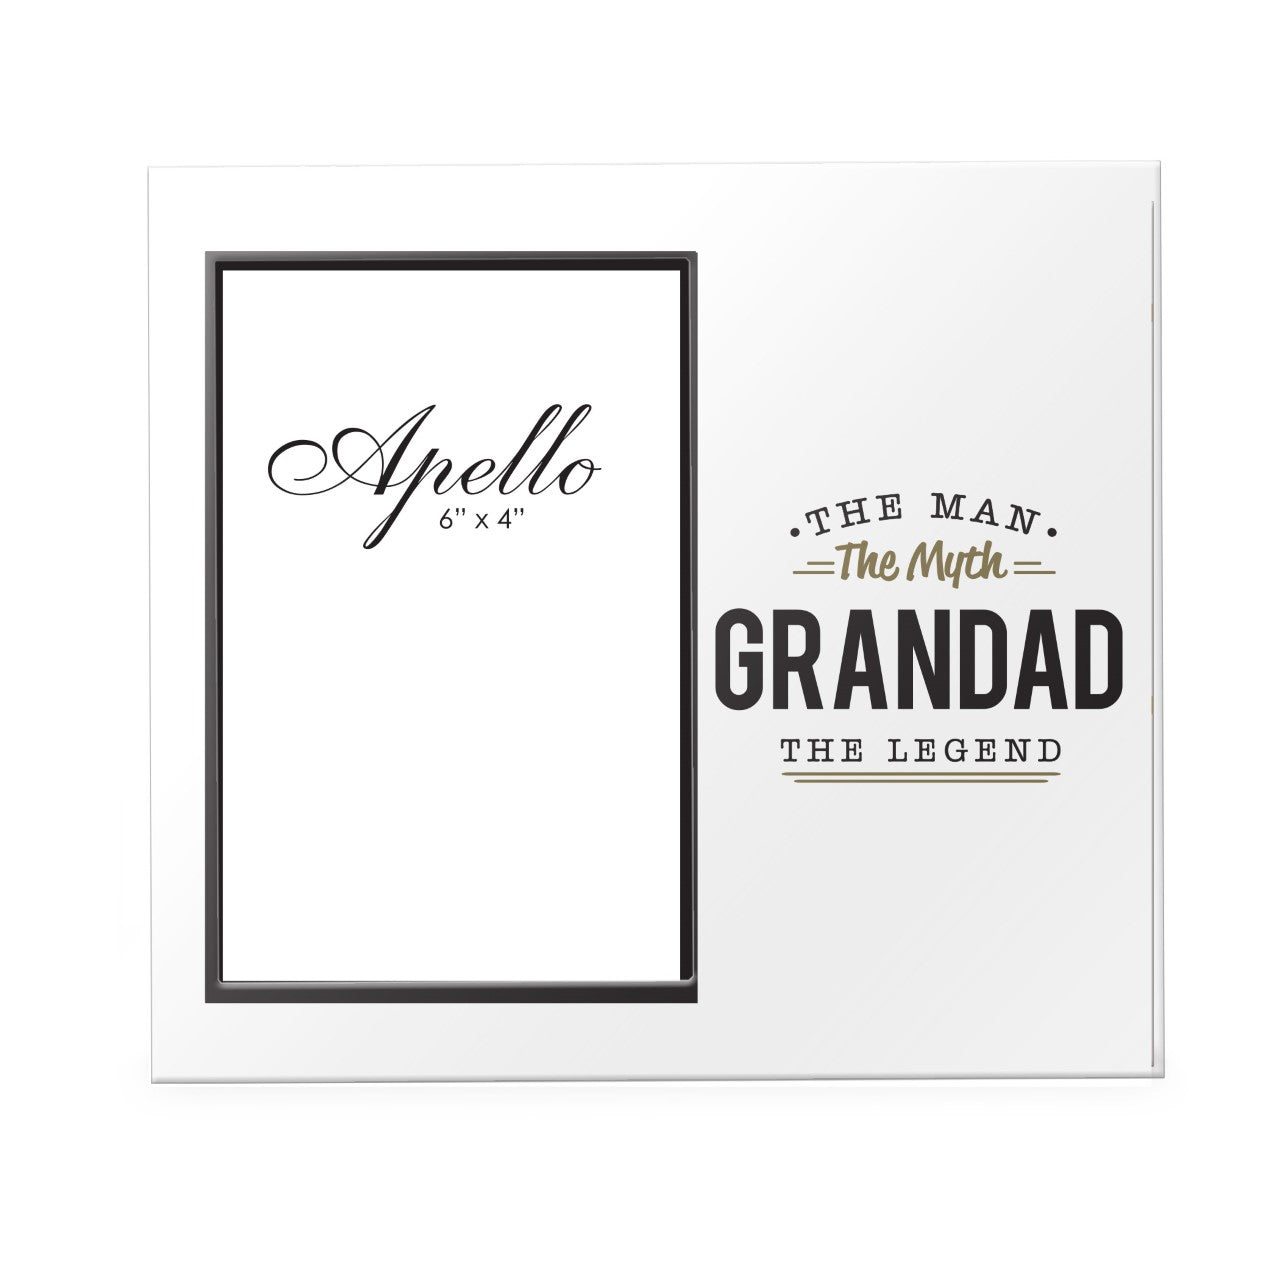 Grandad The Man The Myth 6x4